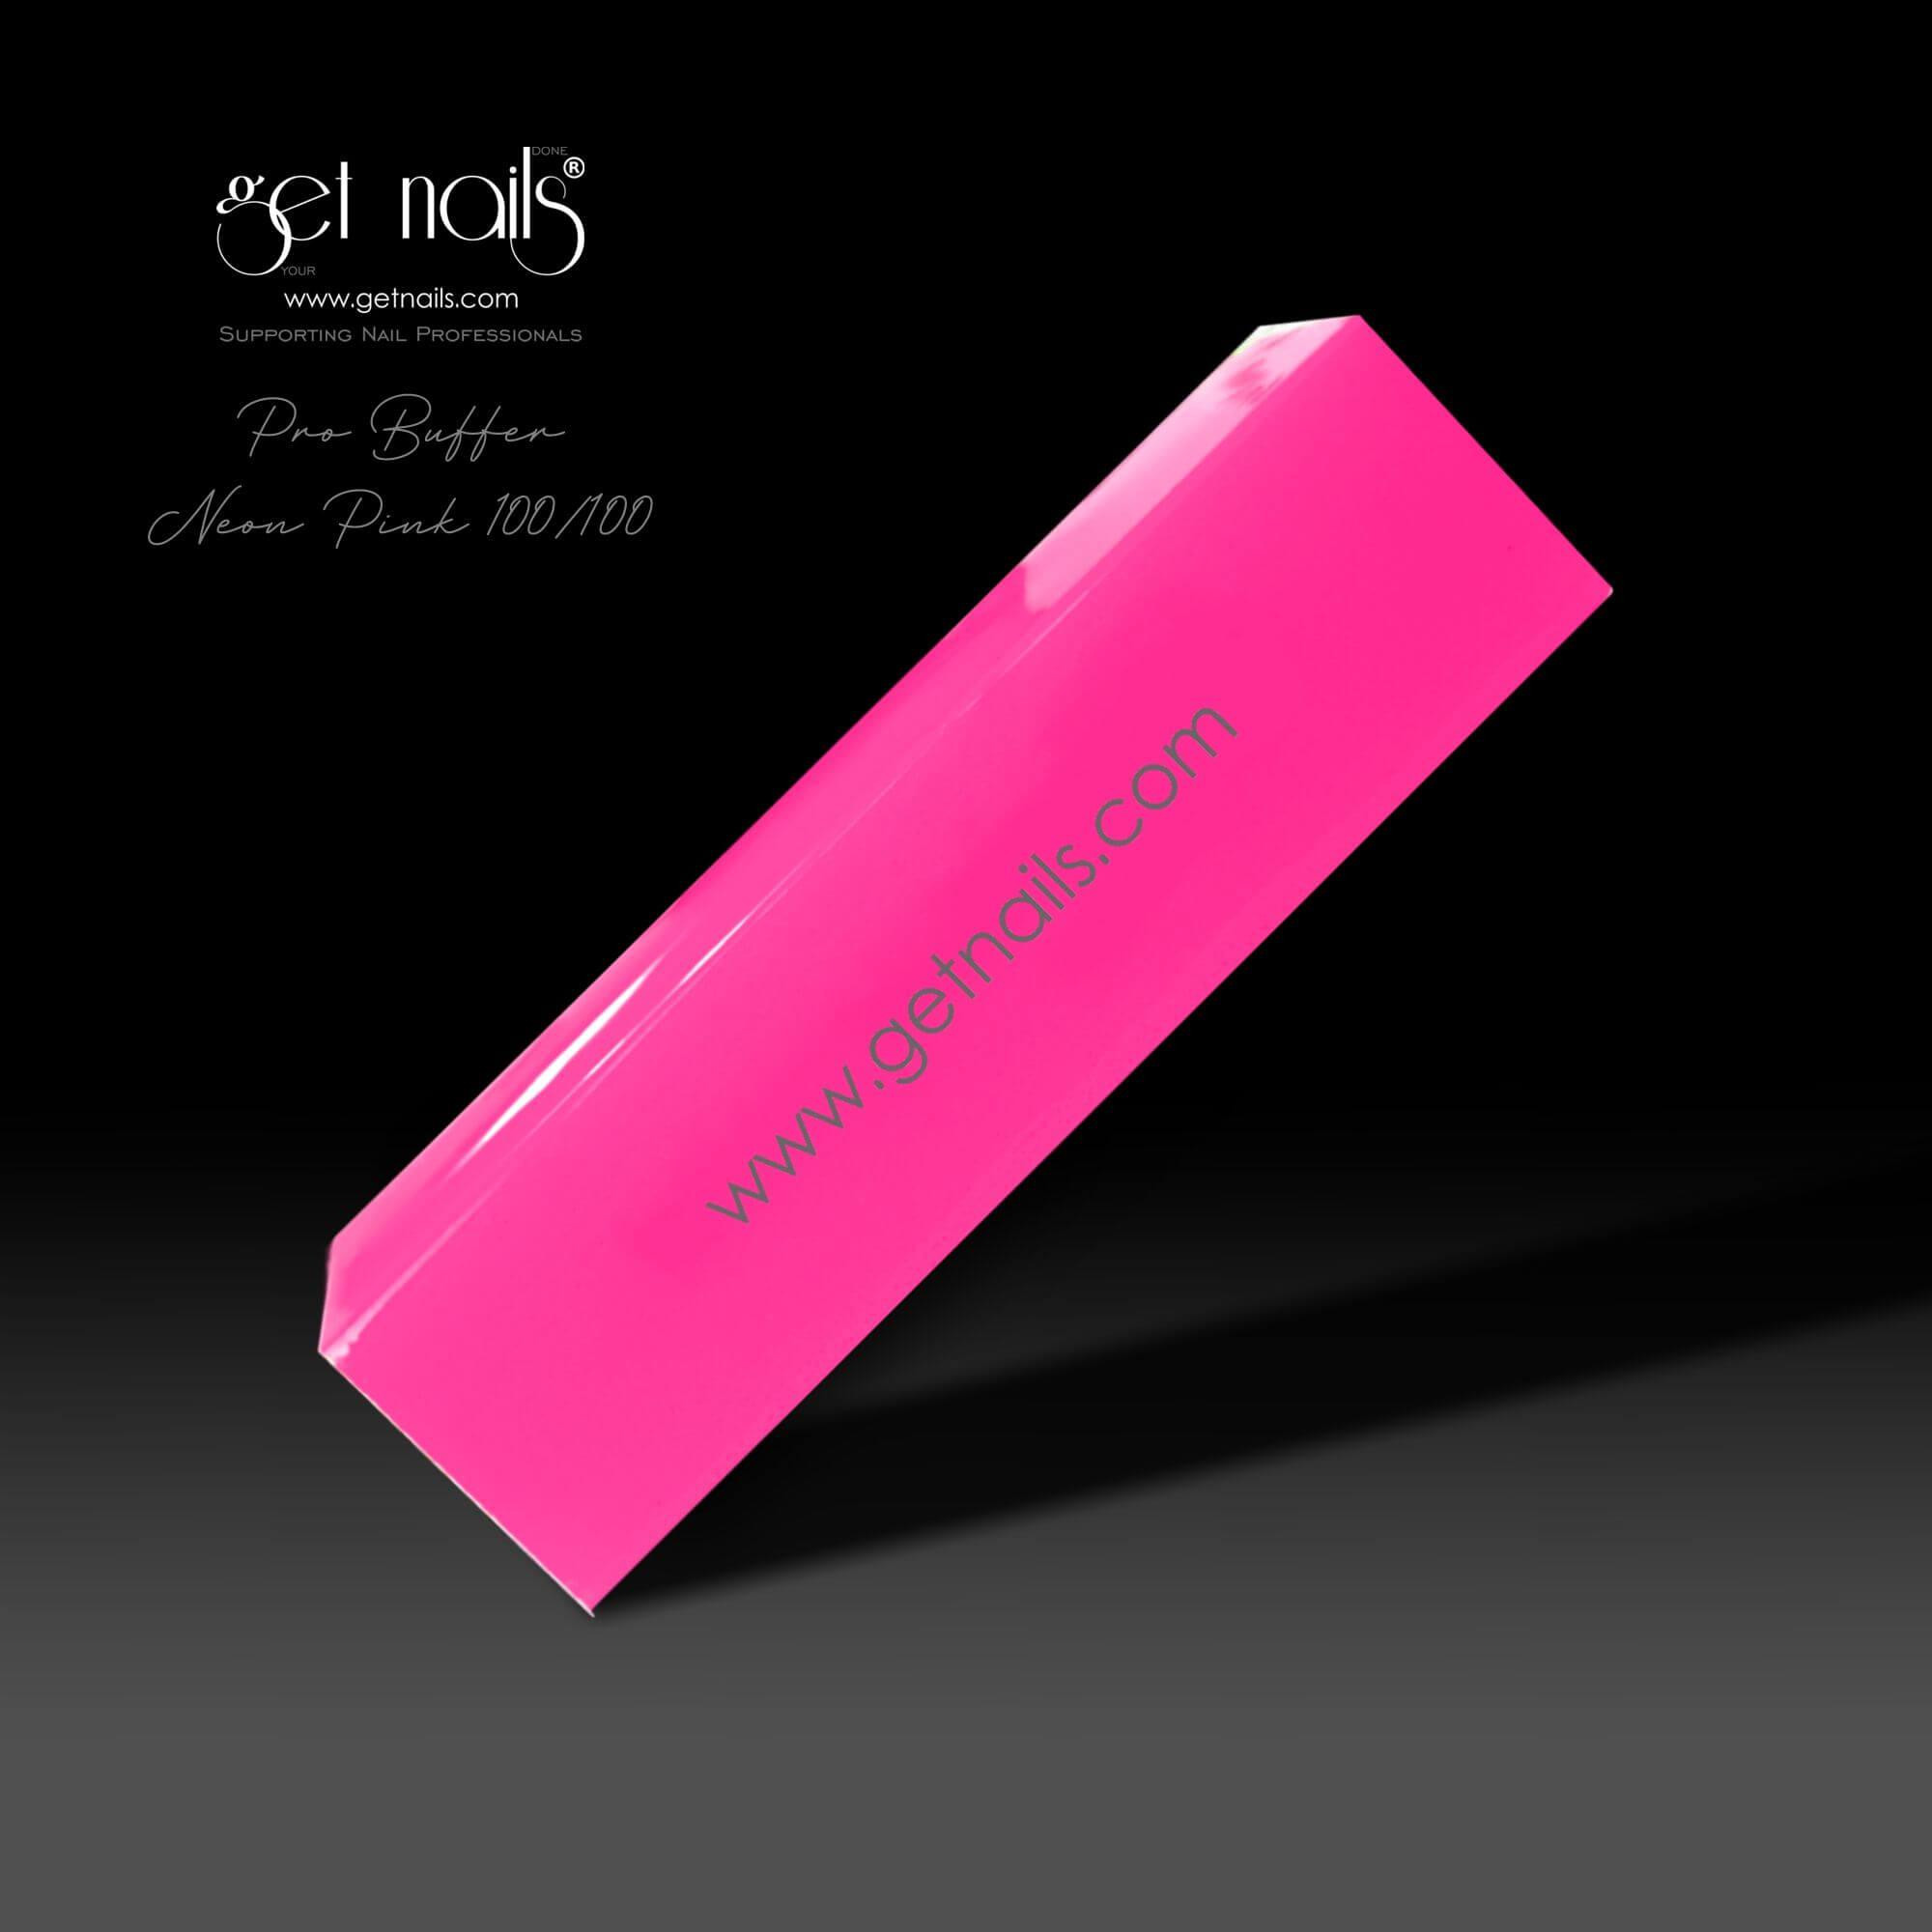 Get Nails Austria - Pro Buffer Neon Pink 100/100